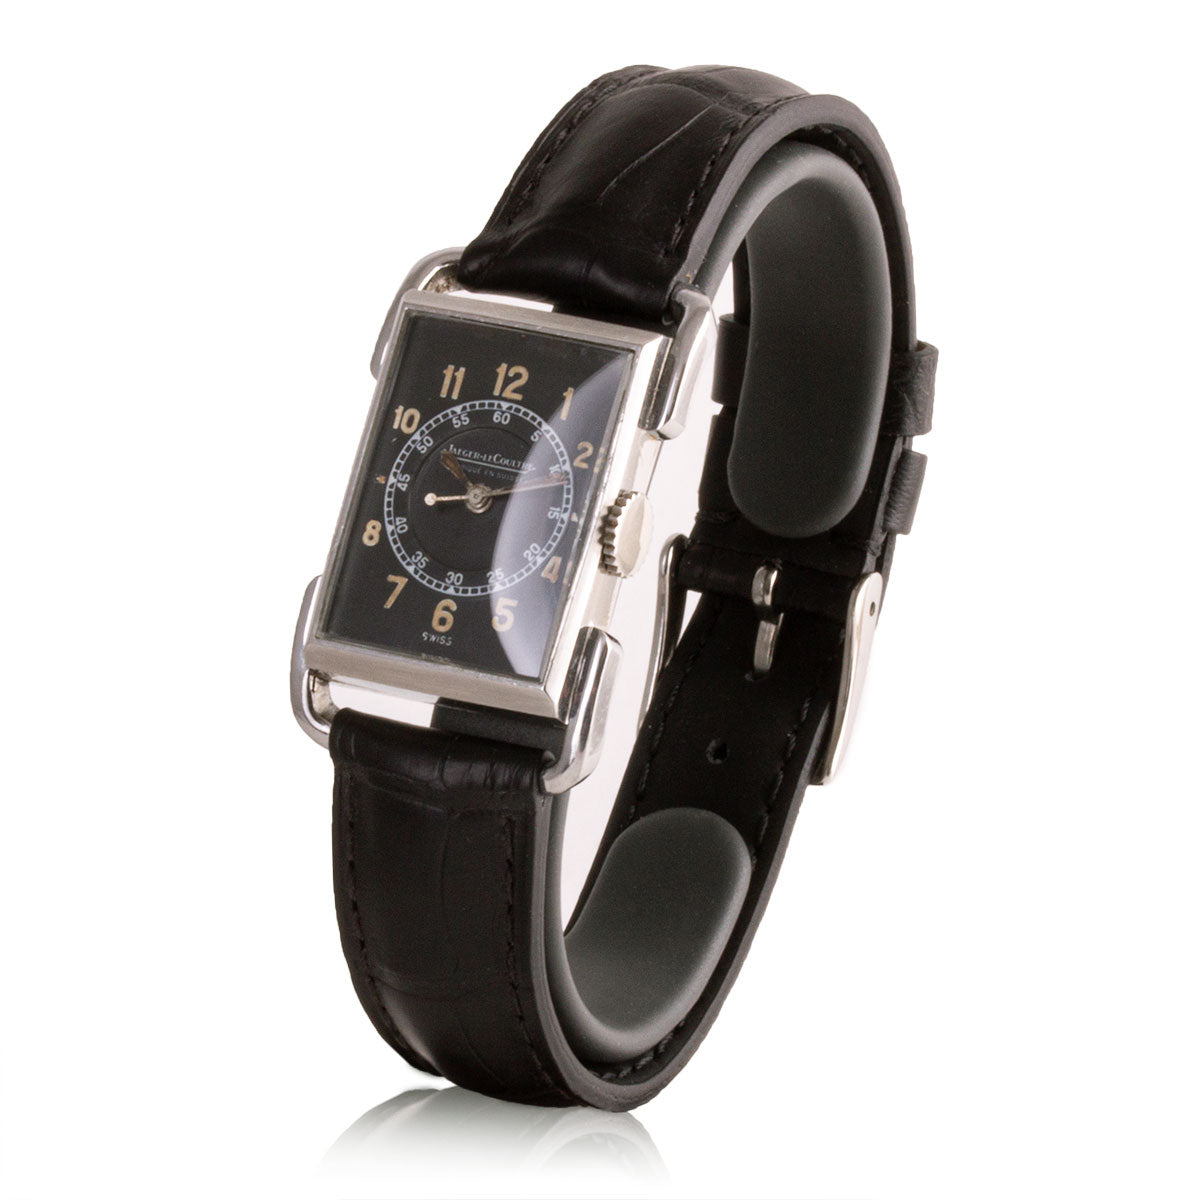 Second-hand watch - Jaeger Lecoultre - Etrier - 2600€